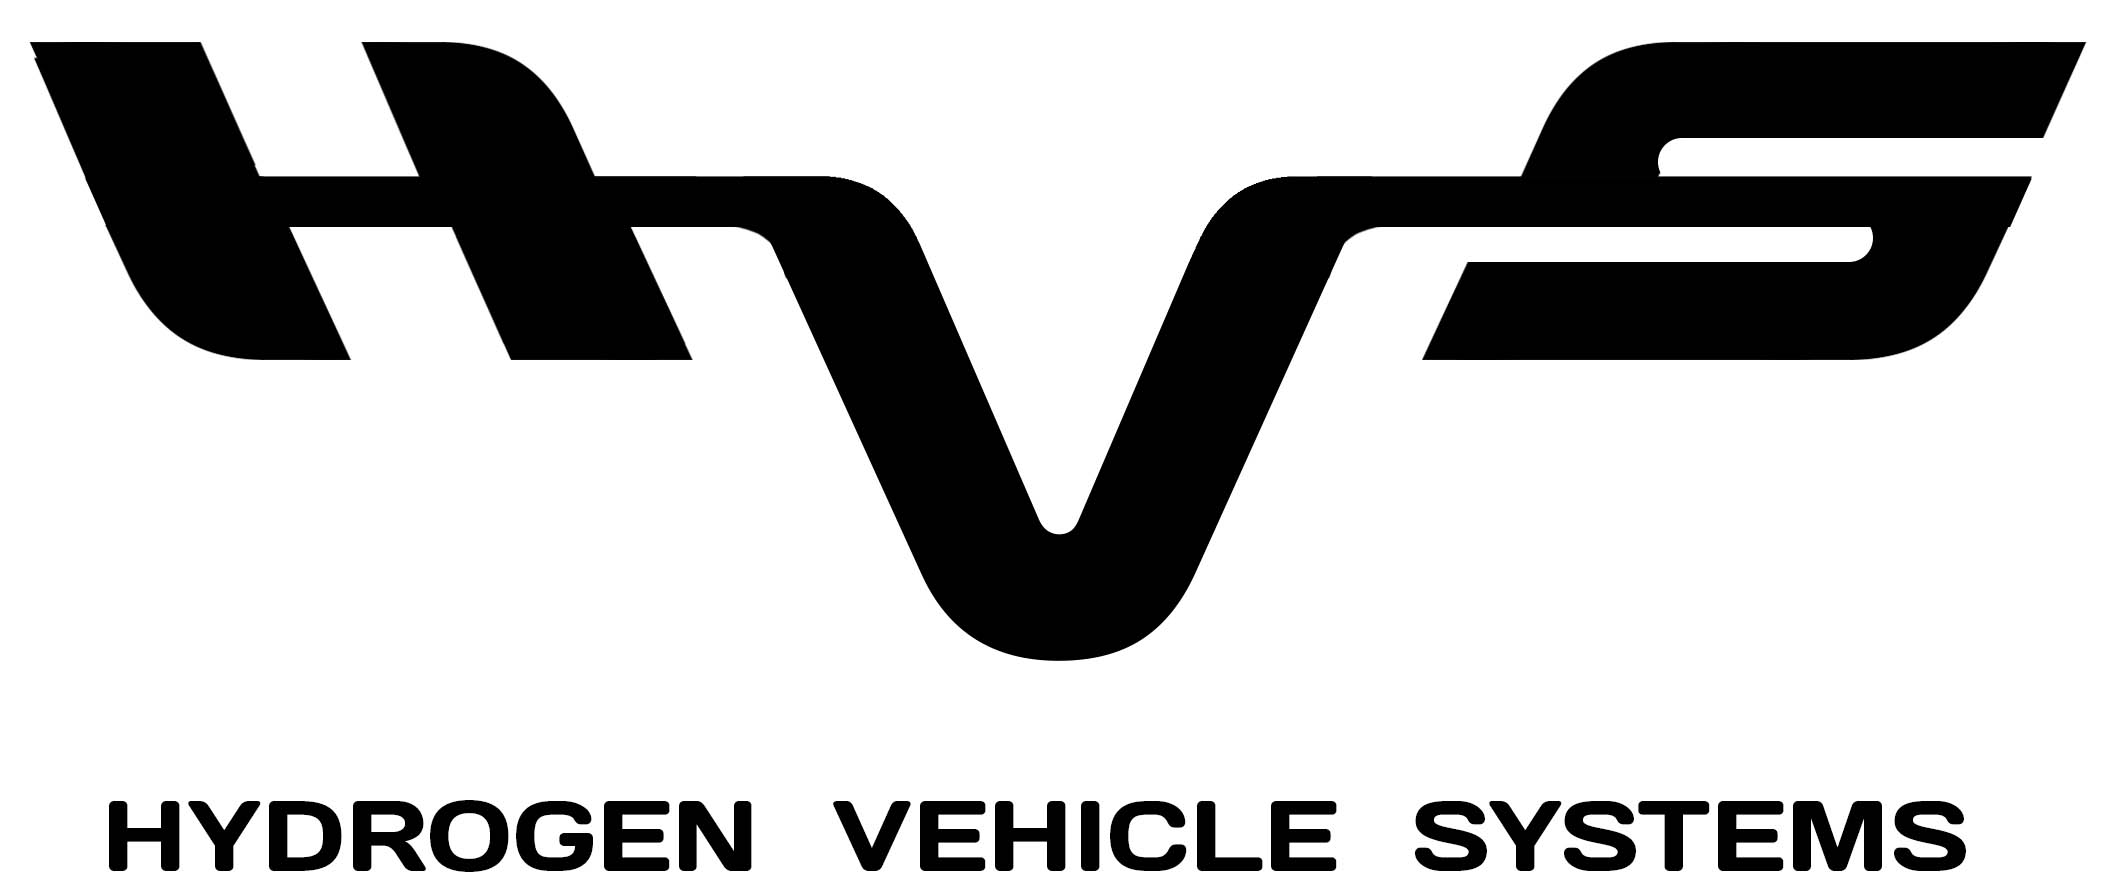 HVS – Logo – Large Black